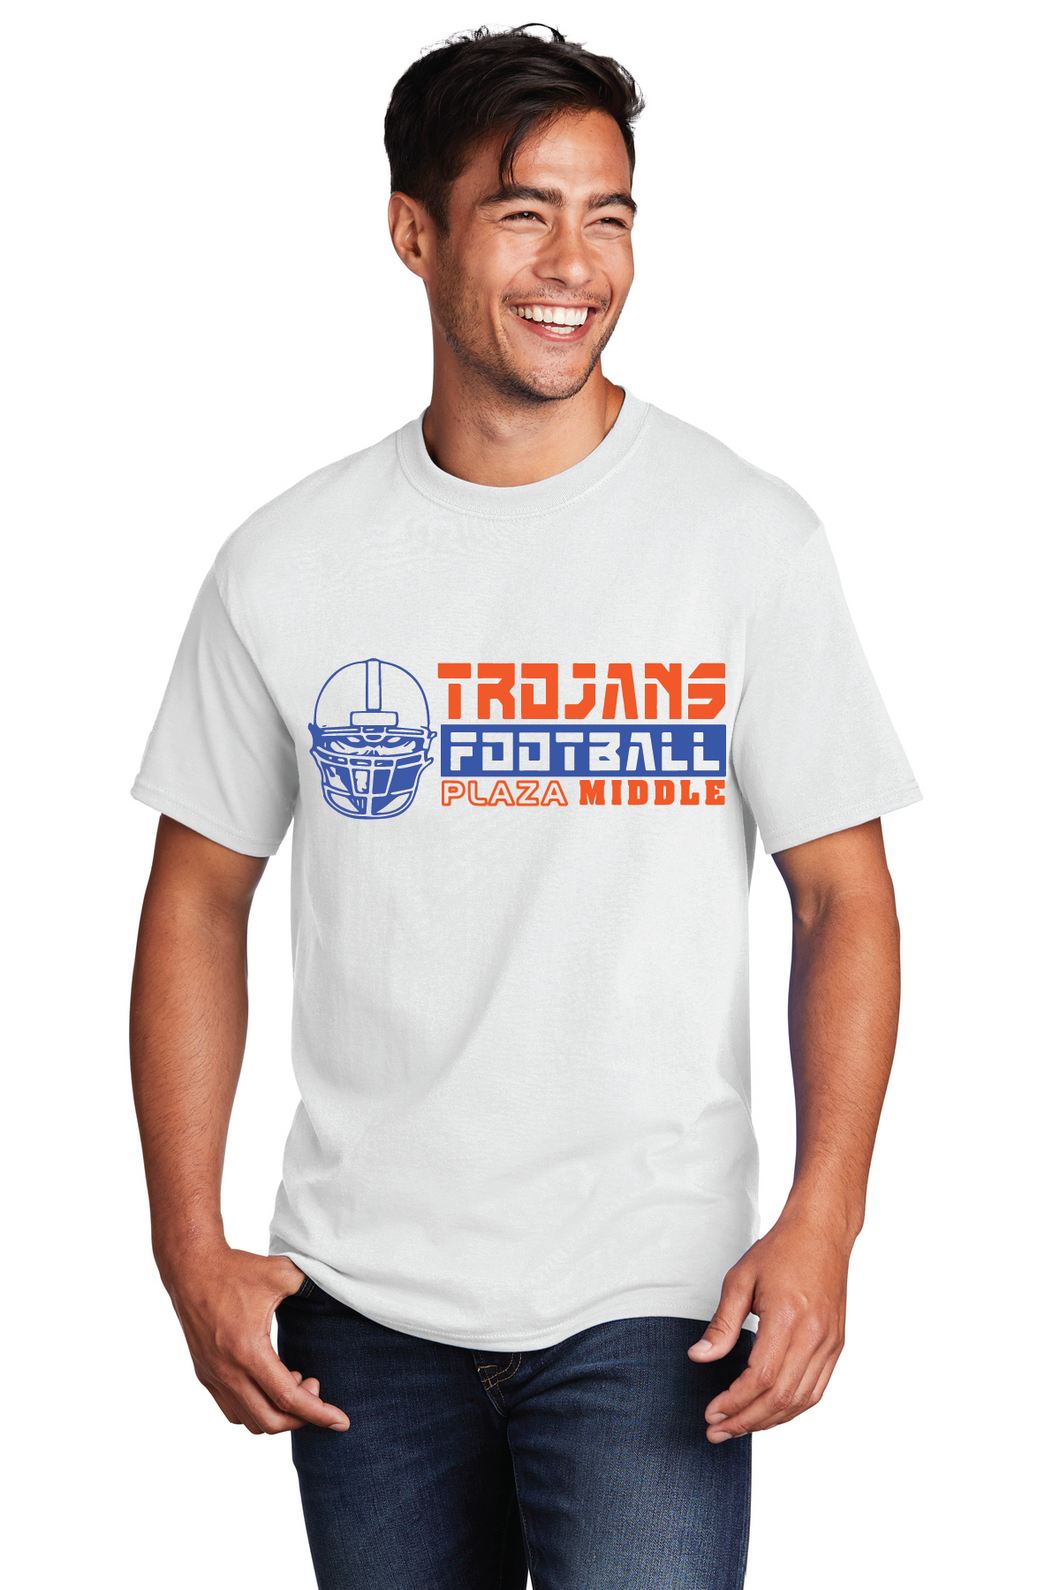 Short Sleeve Cotton T-Shirt (Youth & Adult) / White / Plaza Football